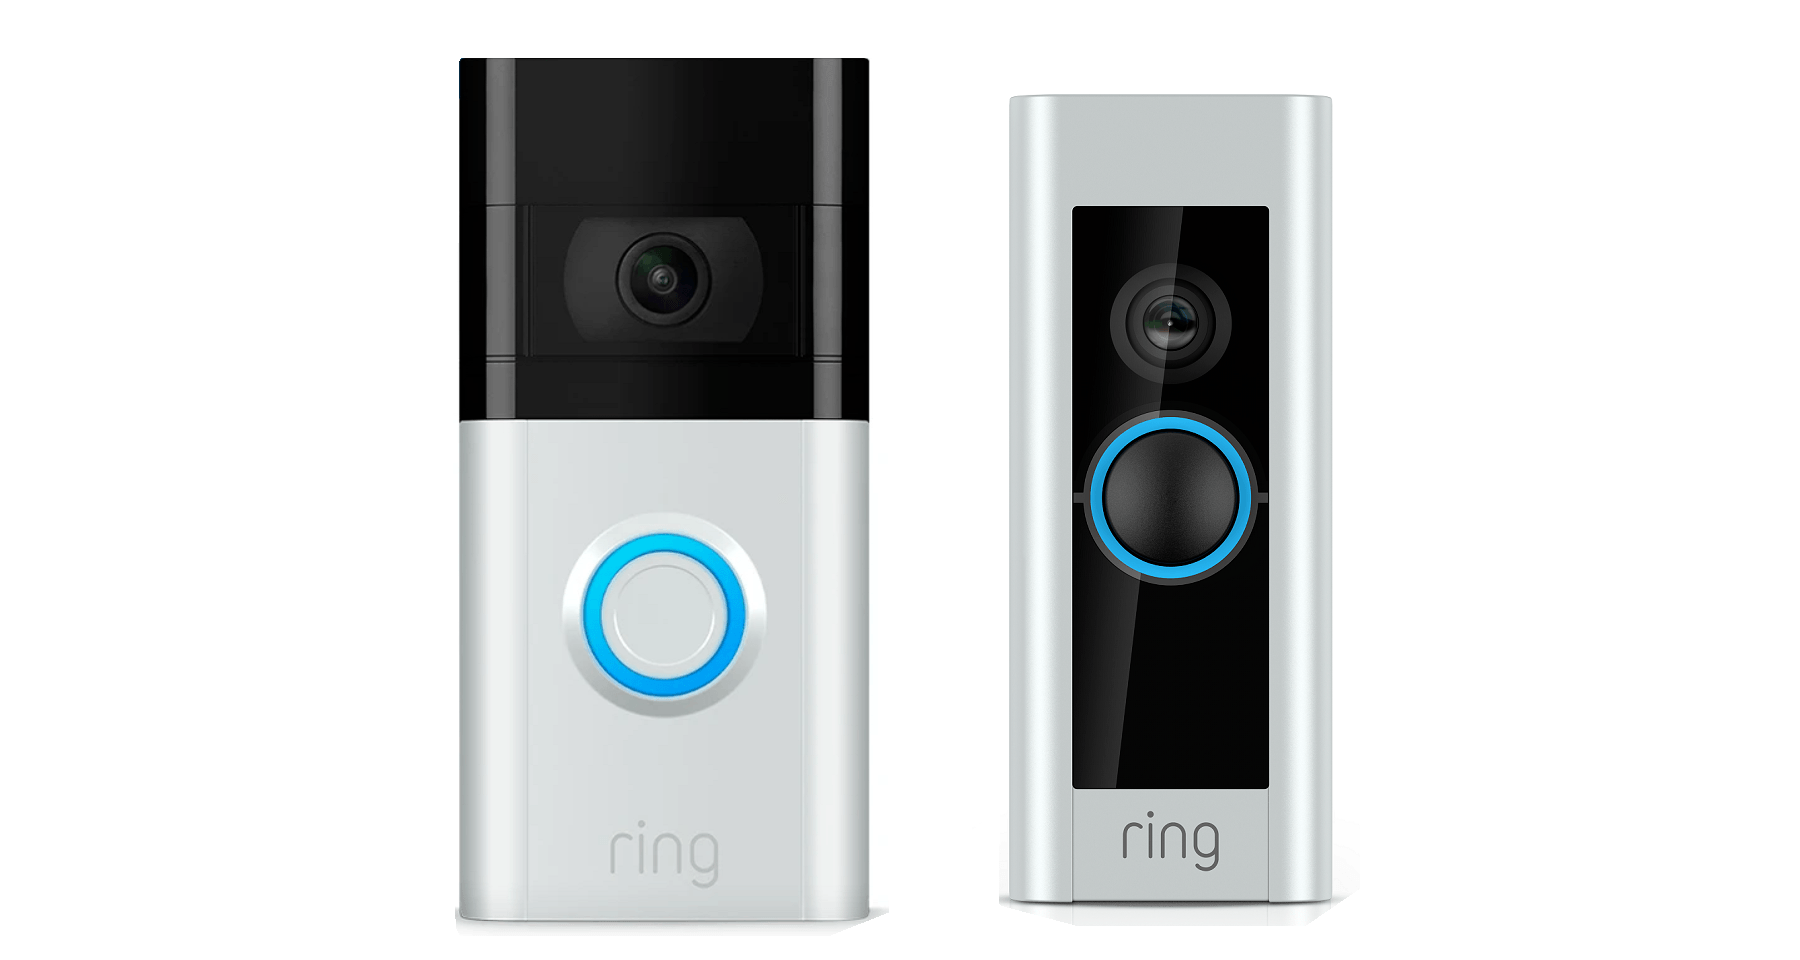 Ring Video Doorbell 3 Vs. Ring Pro Is Newer Better?